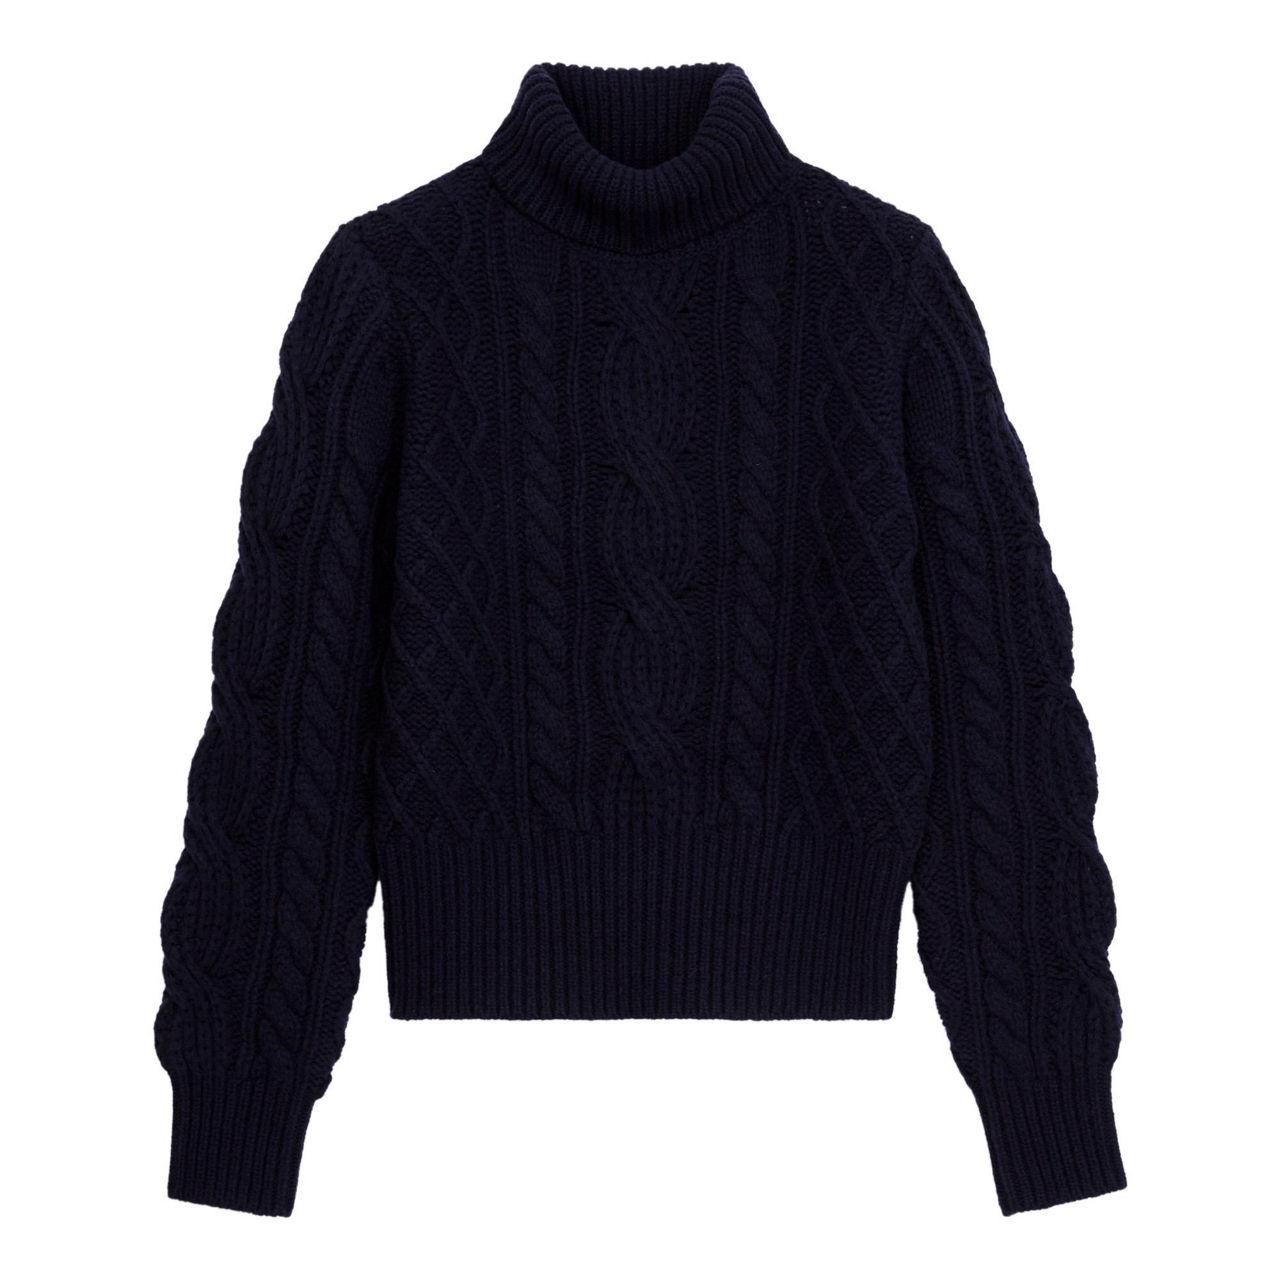 PrettyGuide Women's Long Sweater Turtleneck Cable Knit Tunic